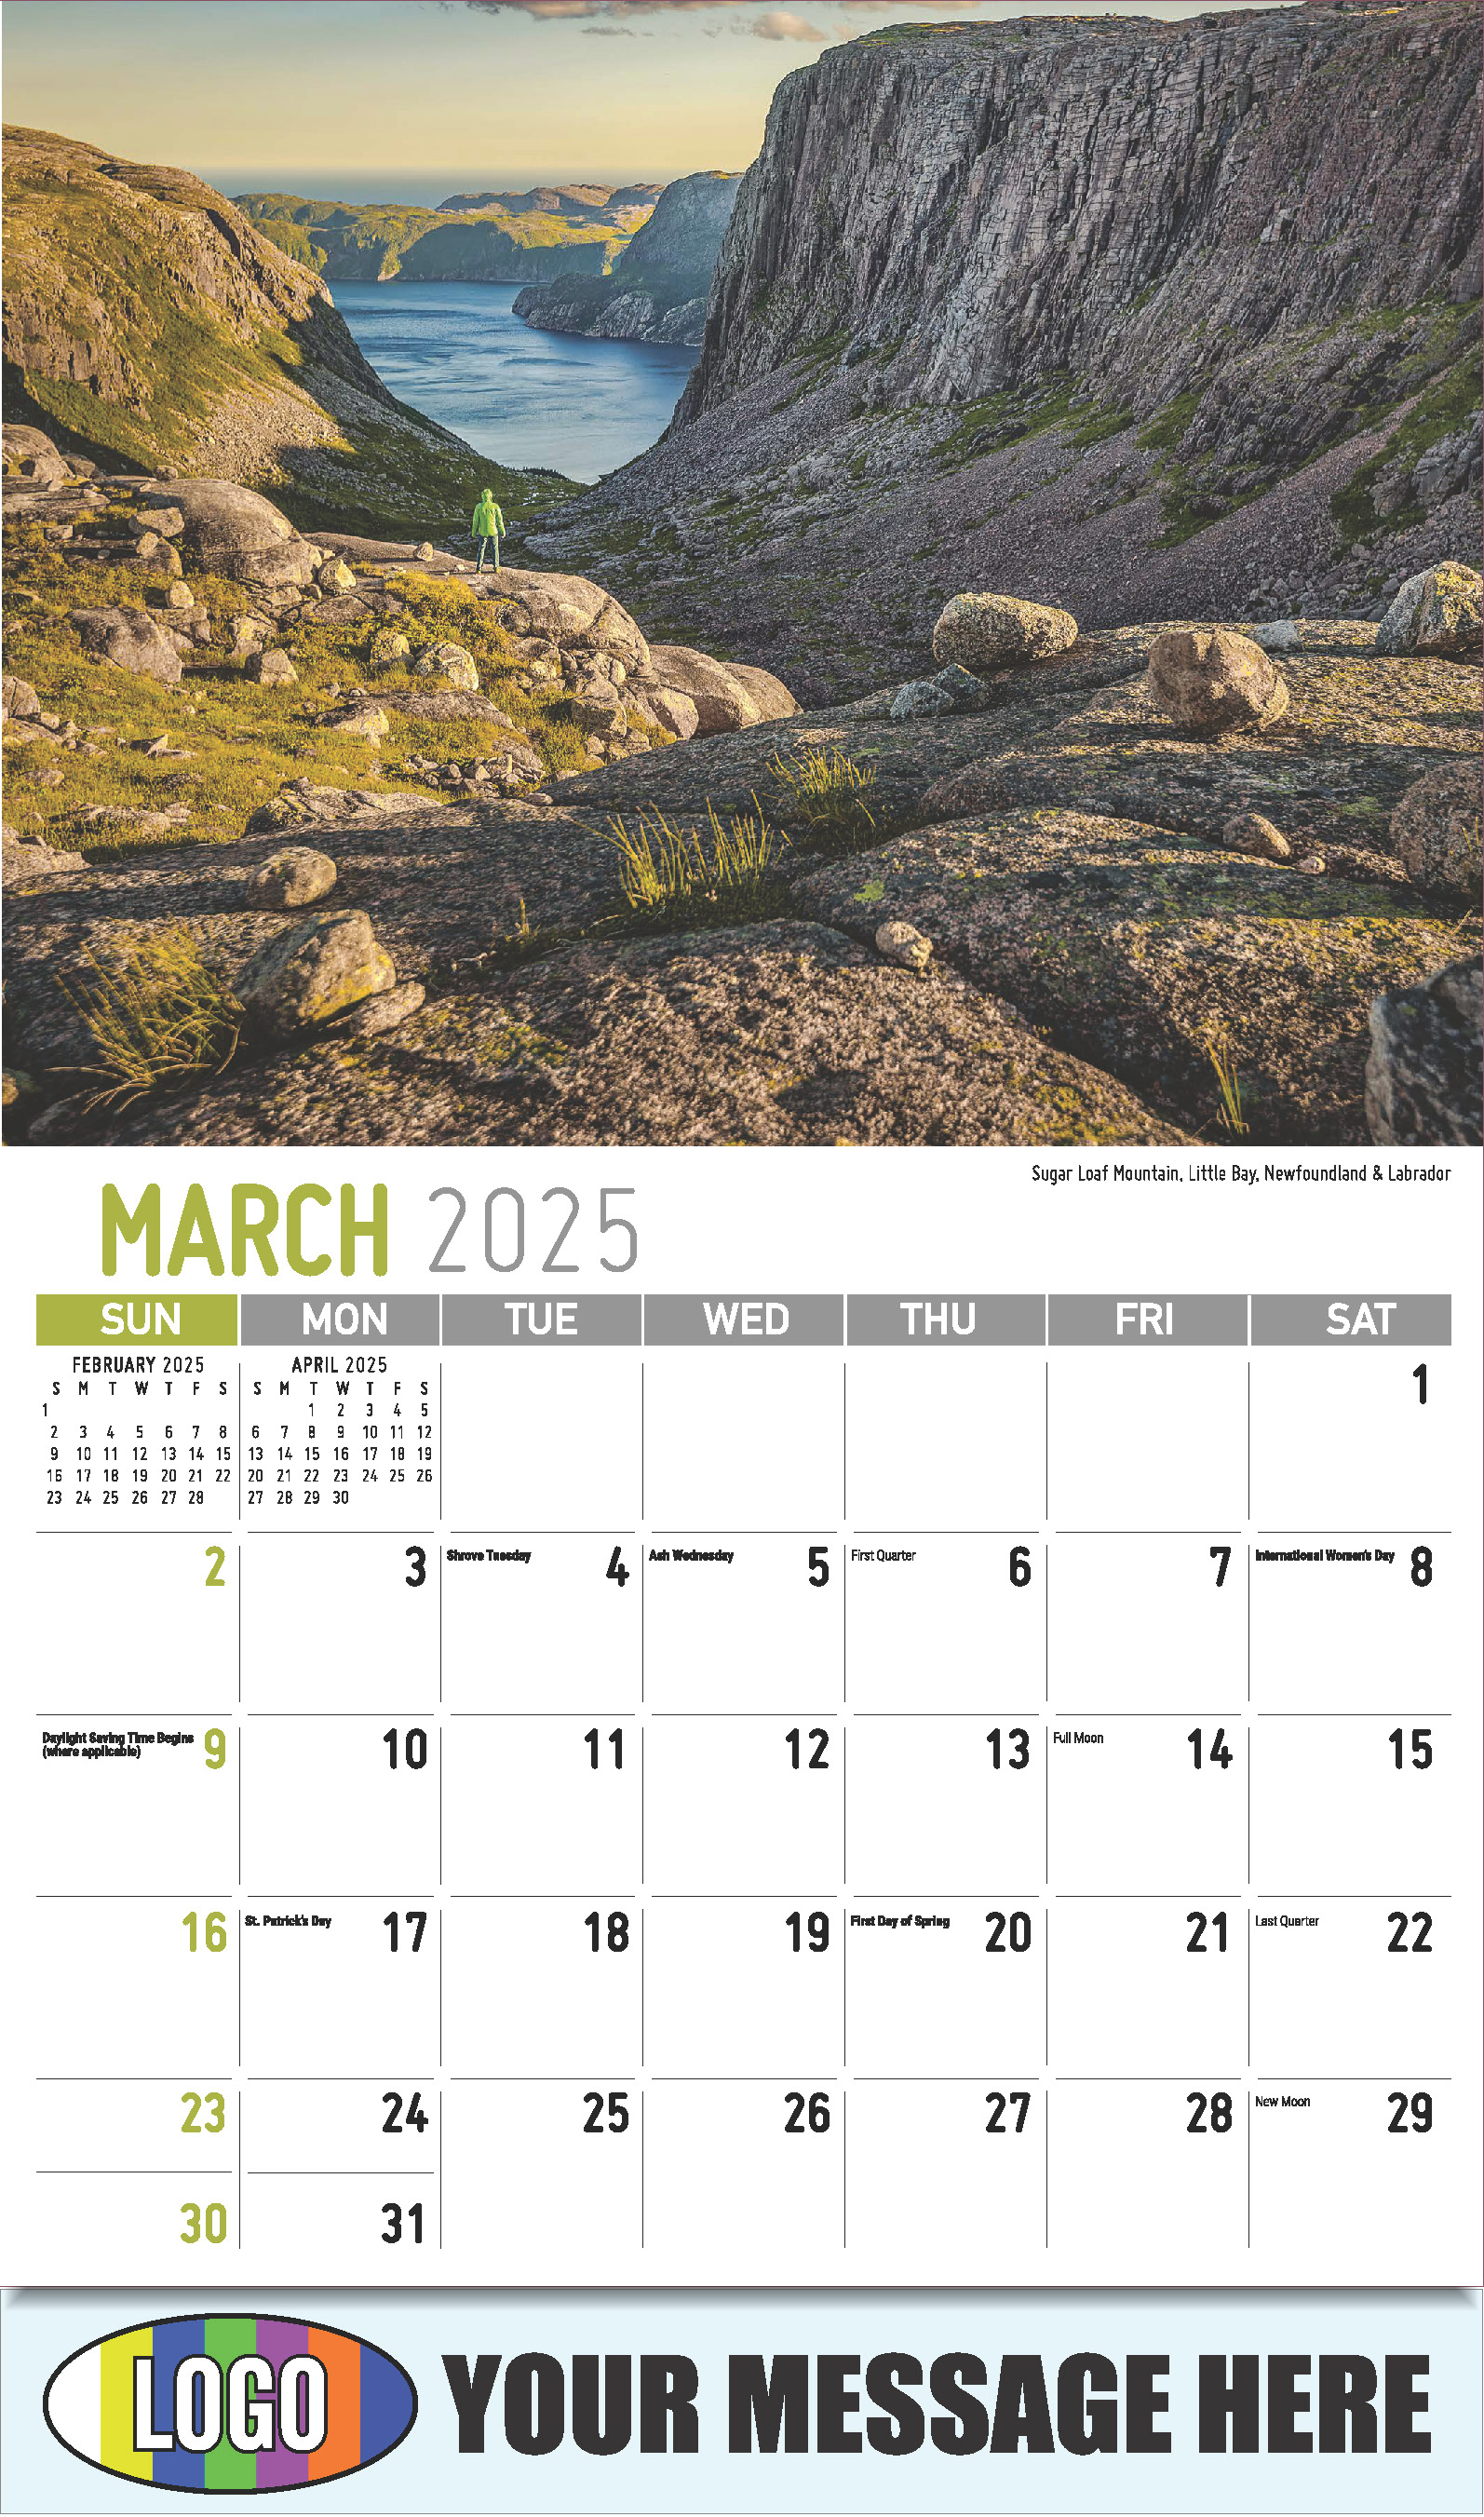 Atlantic Canada Scenic 2025 Business Promotion Calendar - March